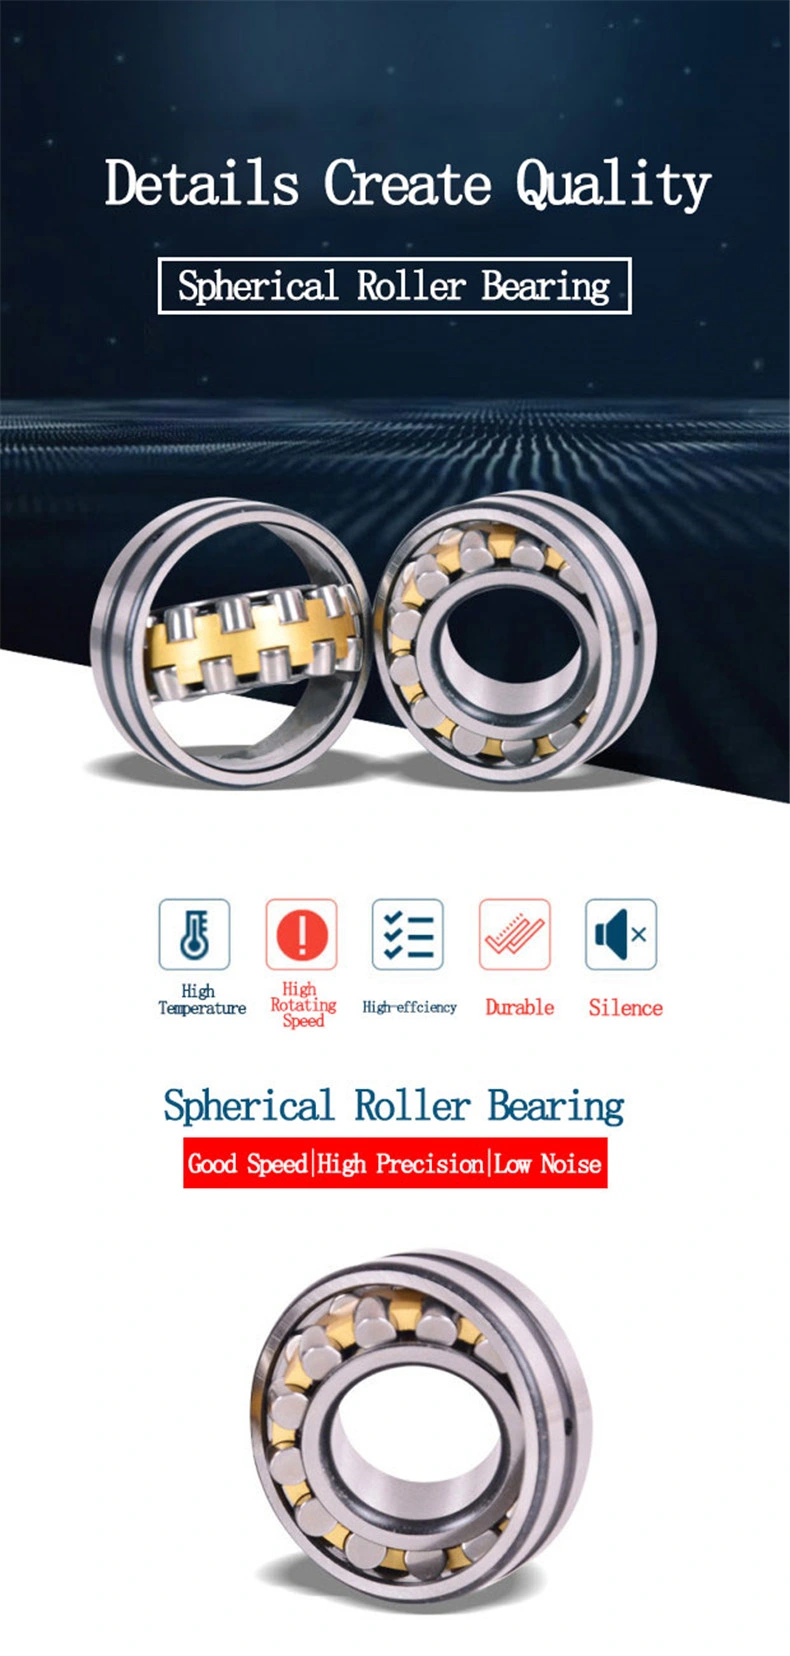 Distributor of NTN Timken NSK SKF NACHI Koyo IKO Ball Bearing Tapper Roller Bearing Spherical Roller Bearing Thrust Ball Bearing Needle Roller Bearing